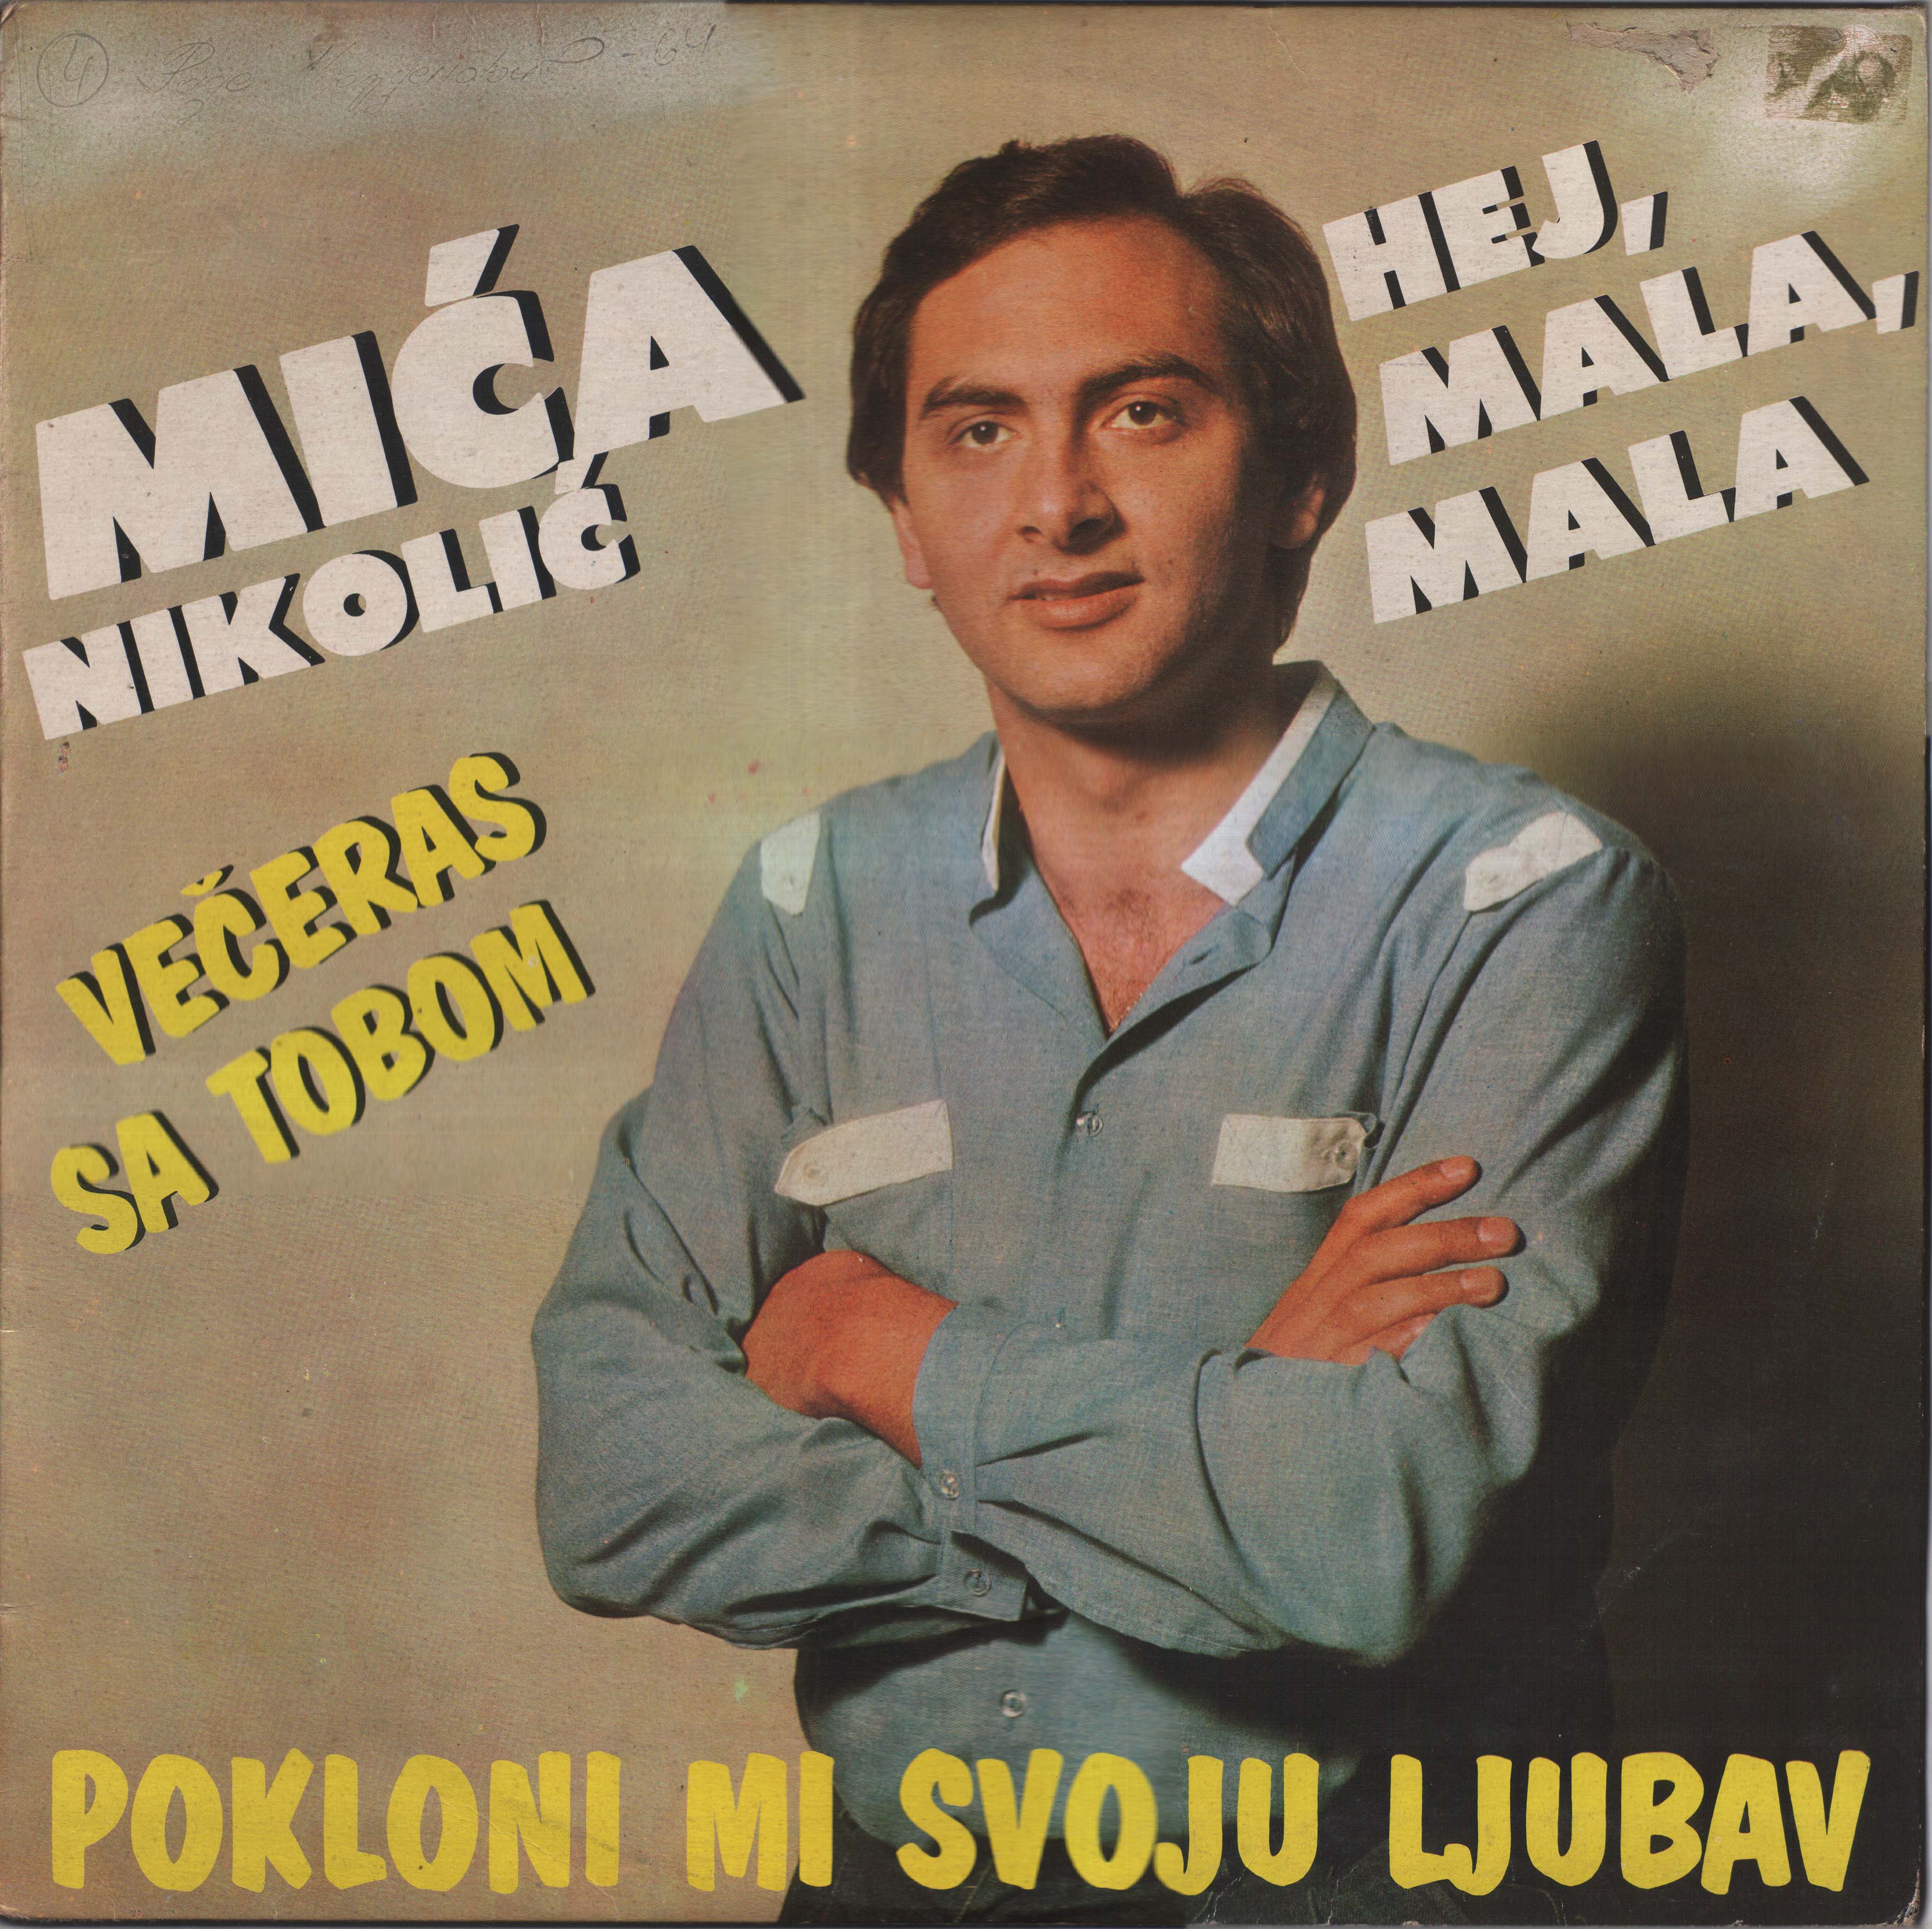 Mica Nikolic 1984 P